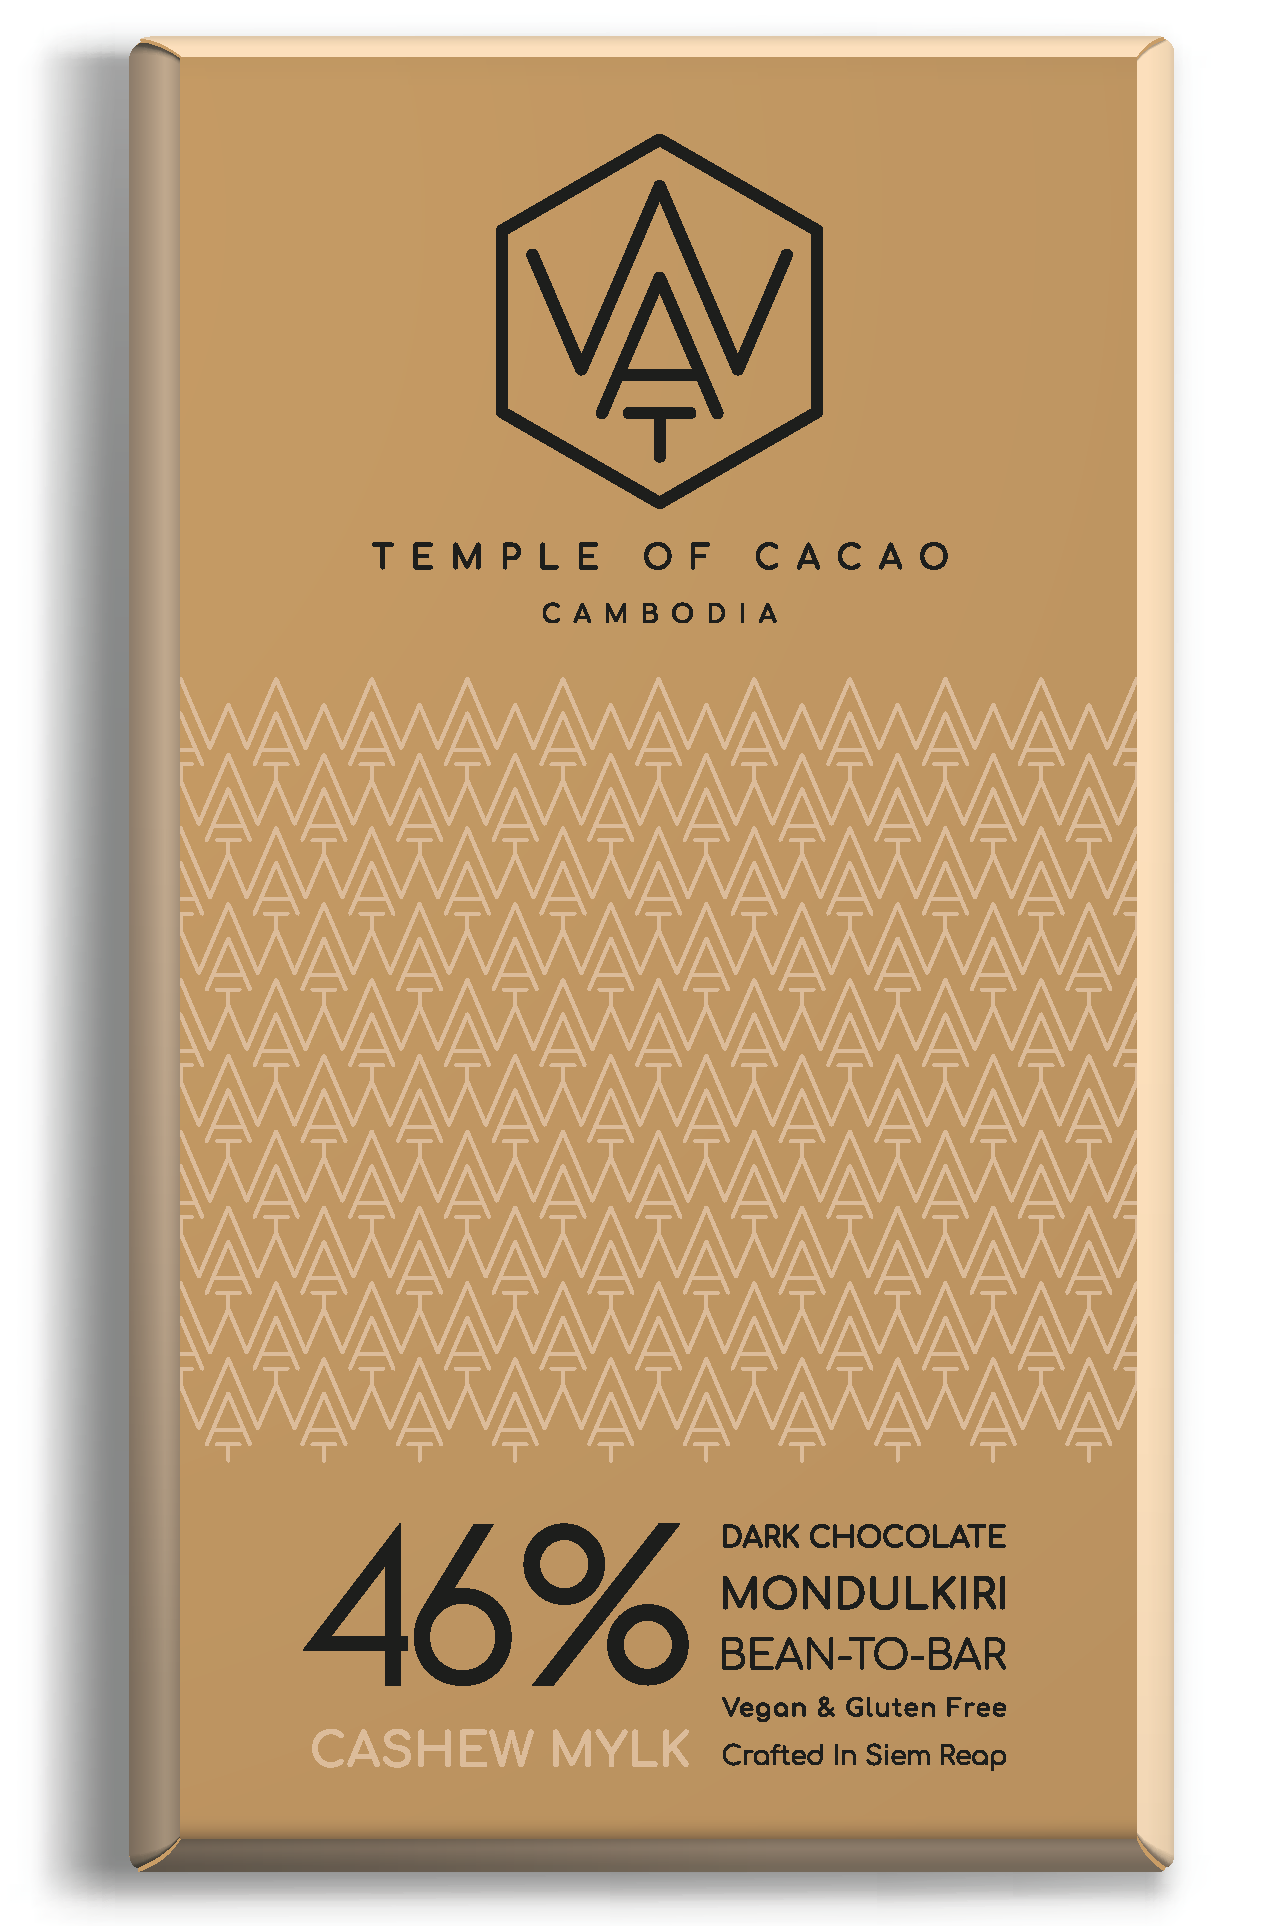 WAT Chocolate čokoláda z Kambodže 46% Cashew mylk 70g